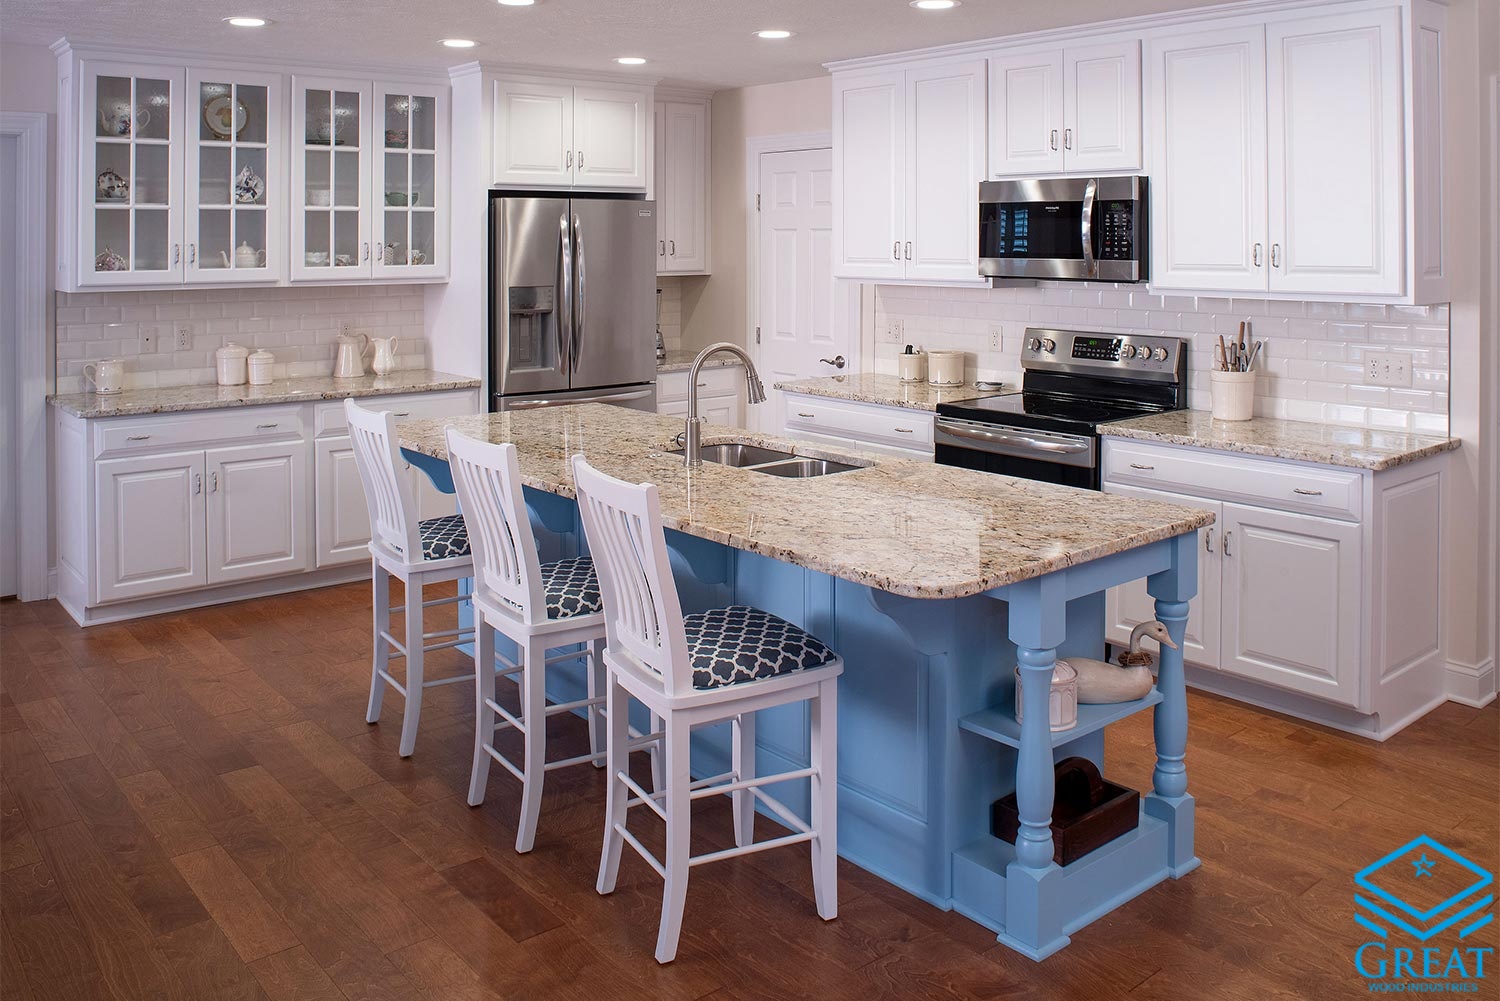 گریت کابینت | شرکت کابینت آشپزخانه گریت | amish made decor white kitchen cabinets with custom blue island ba28b319 5aaa 4eb6 b811 ea70027ddfa6